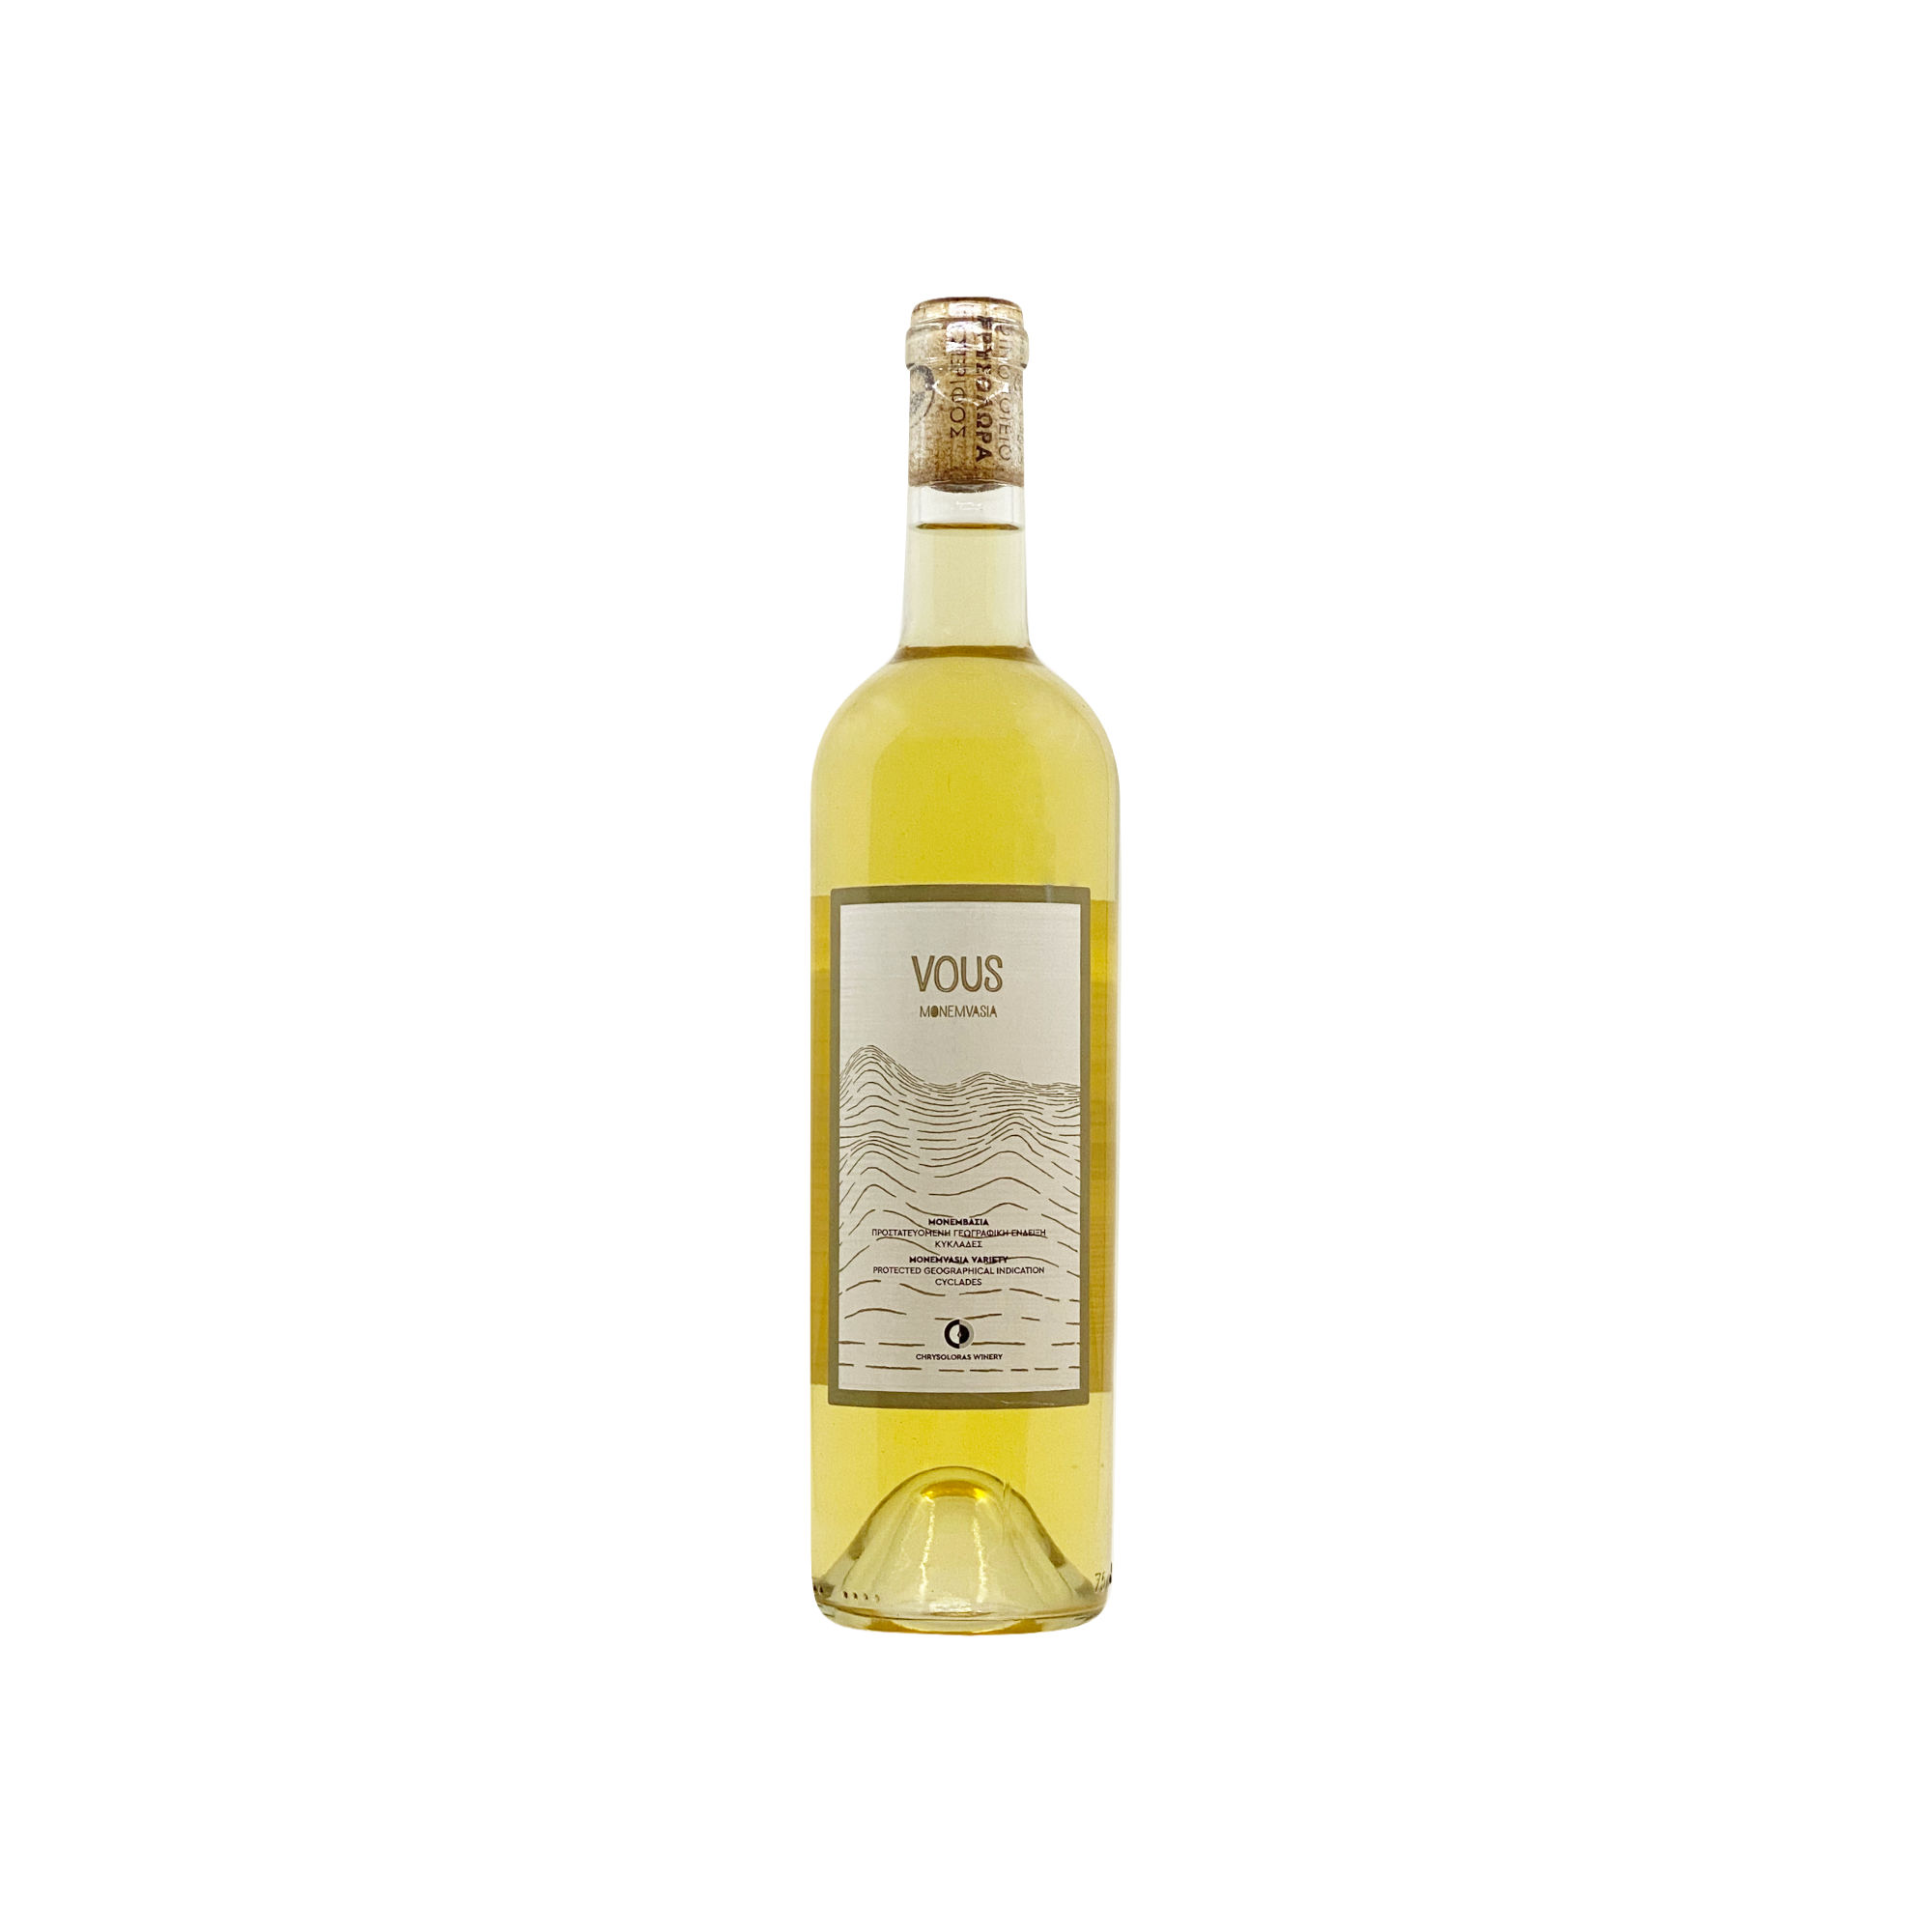 Vous Monemvasia - Chrysoloras winery - Organic natural white wine - Cyclades, Aegean sea, Greece - Eklektikon